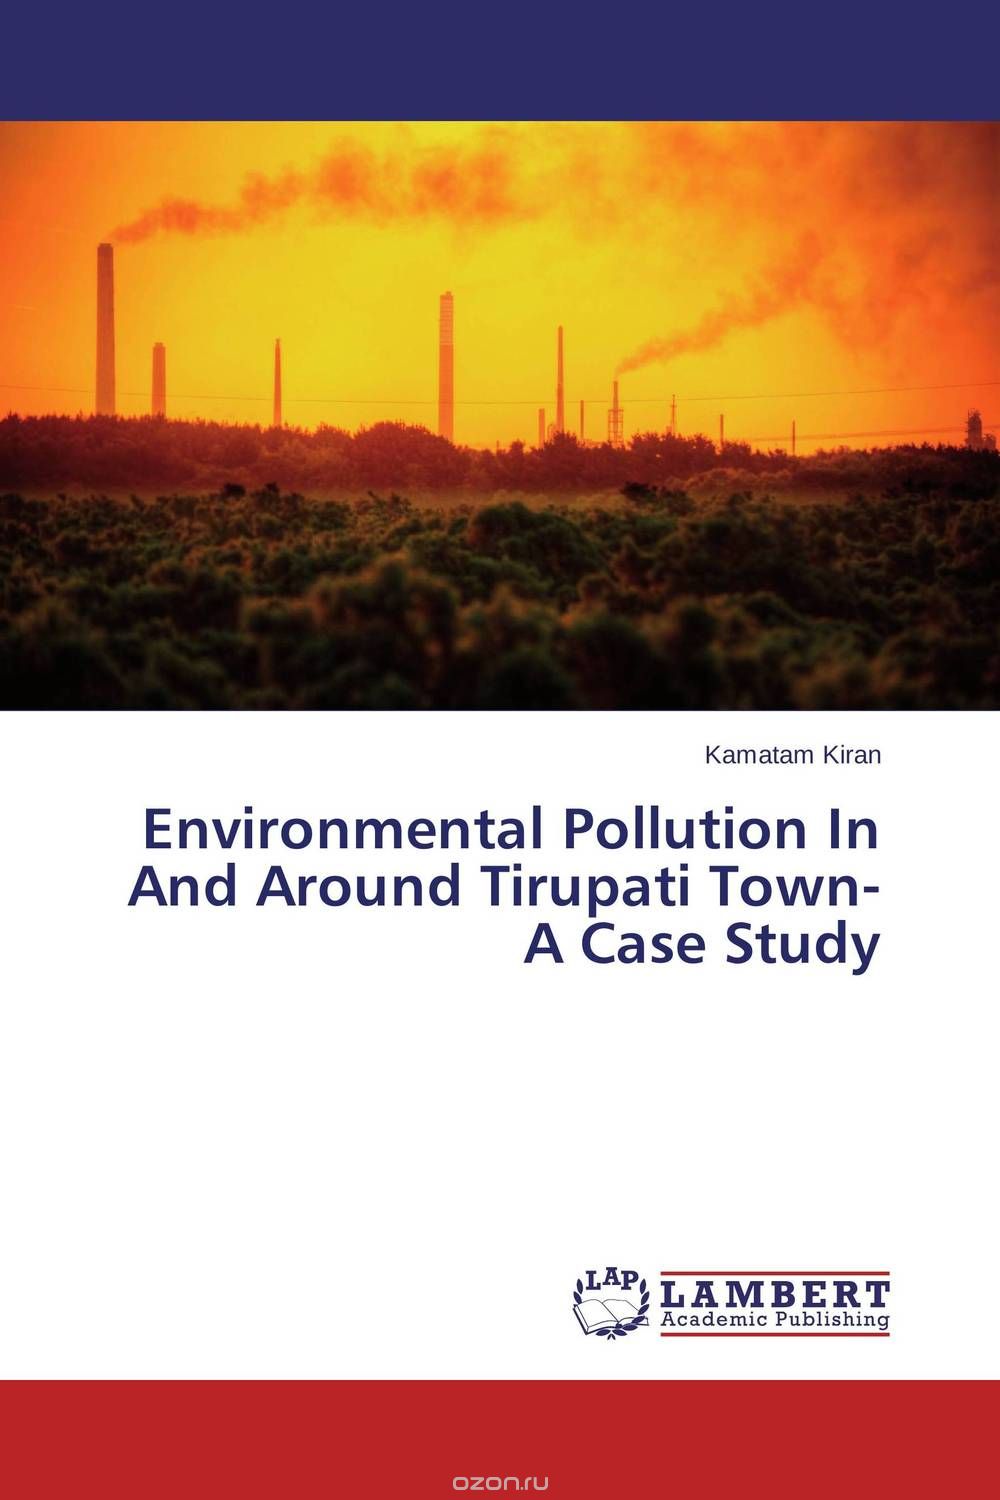 Скачать книгу "Environmental Pollution In And Around Tirupati Town- A Case Study"